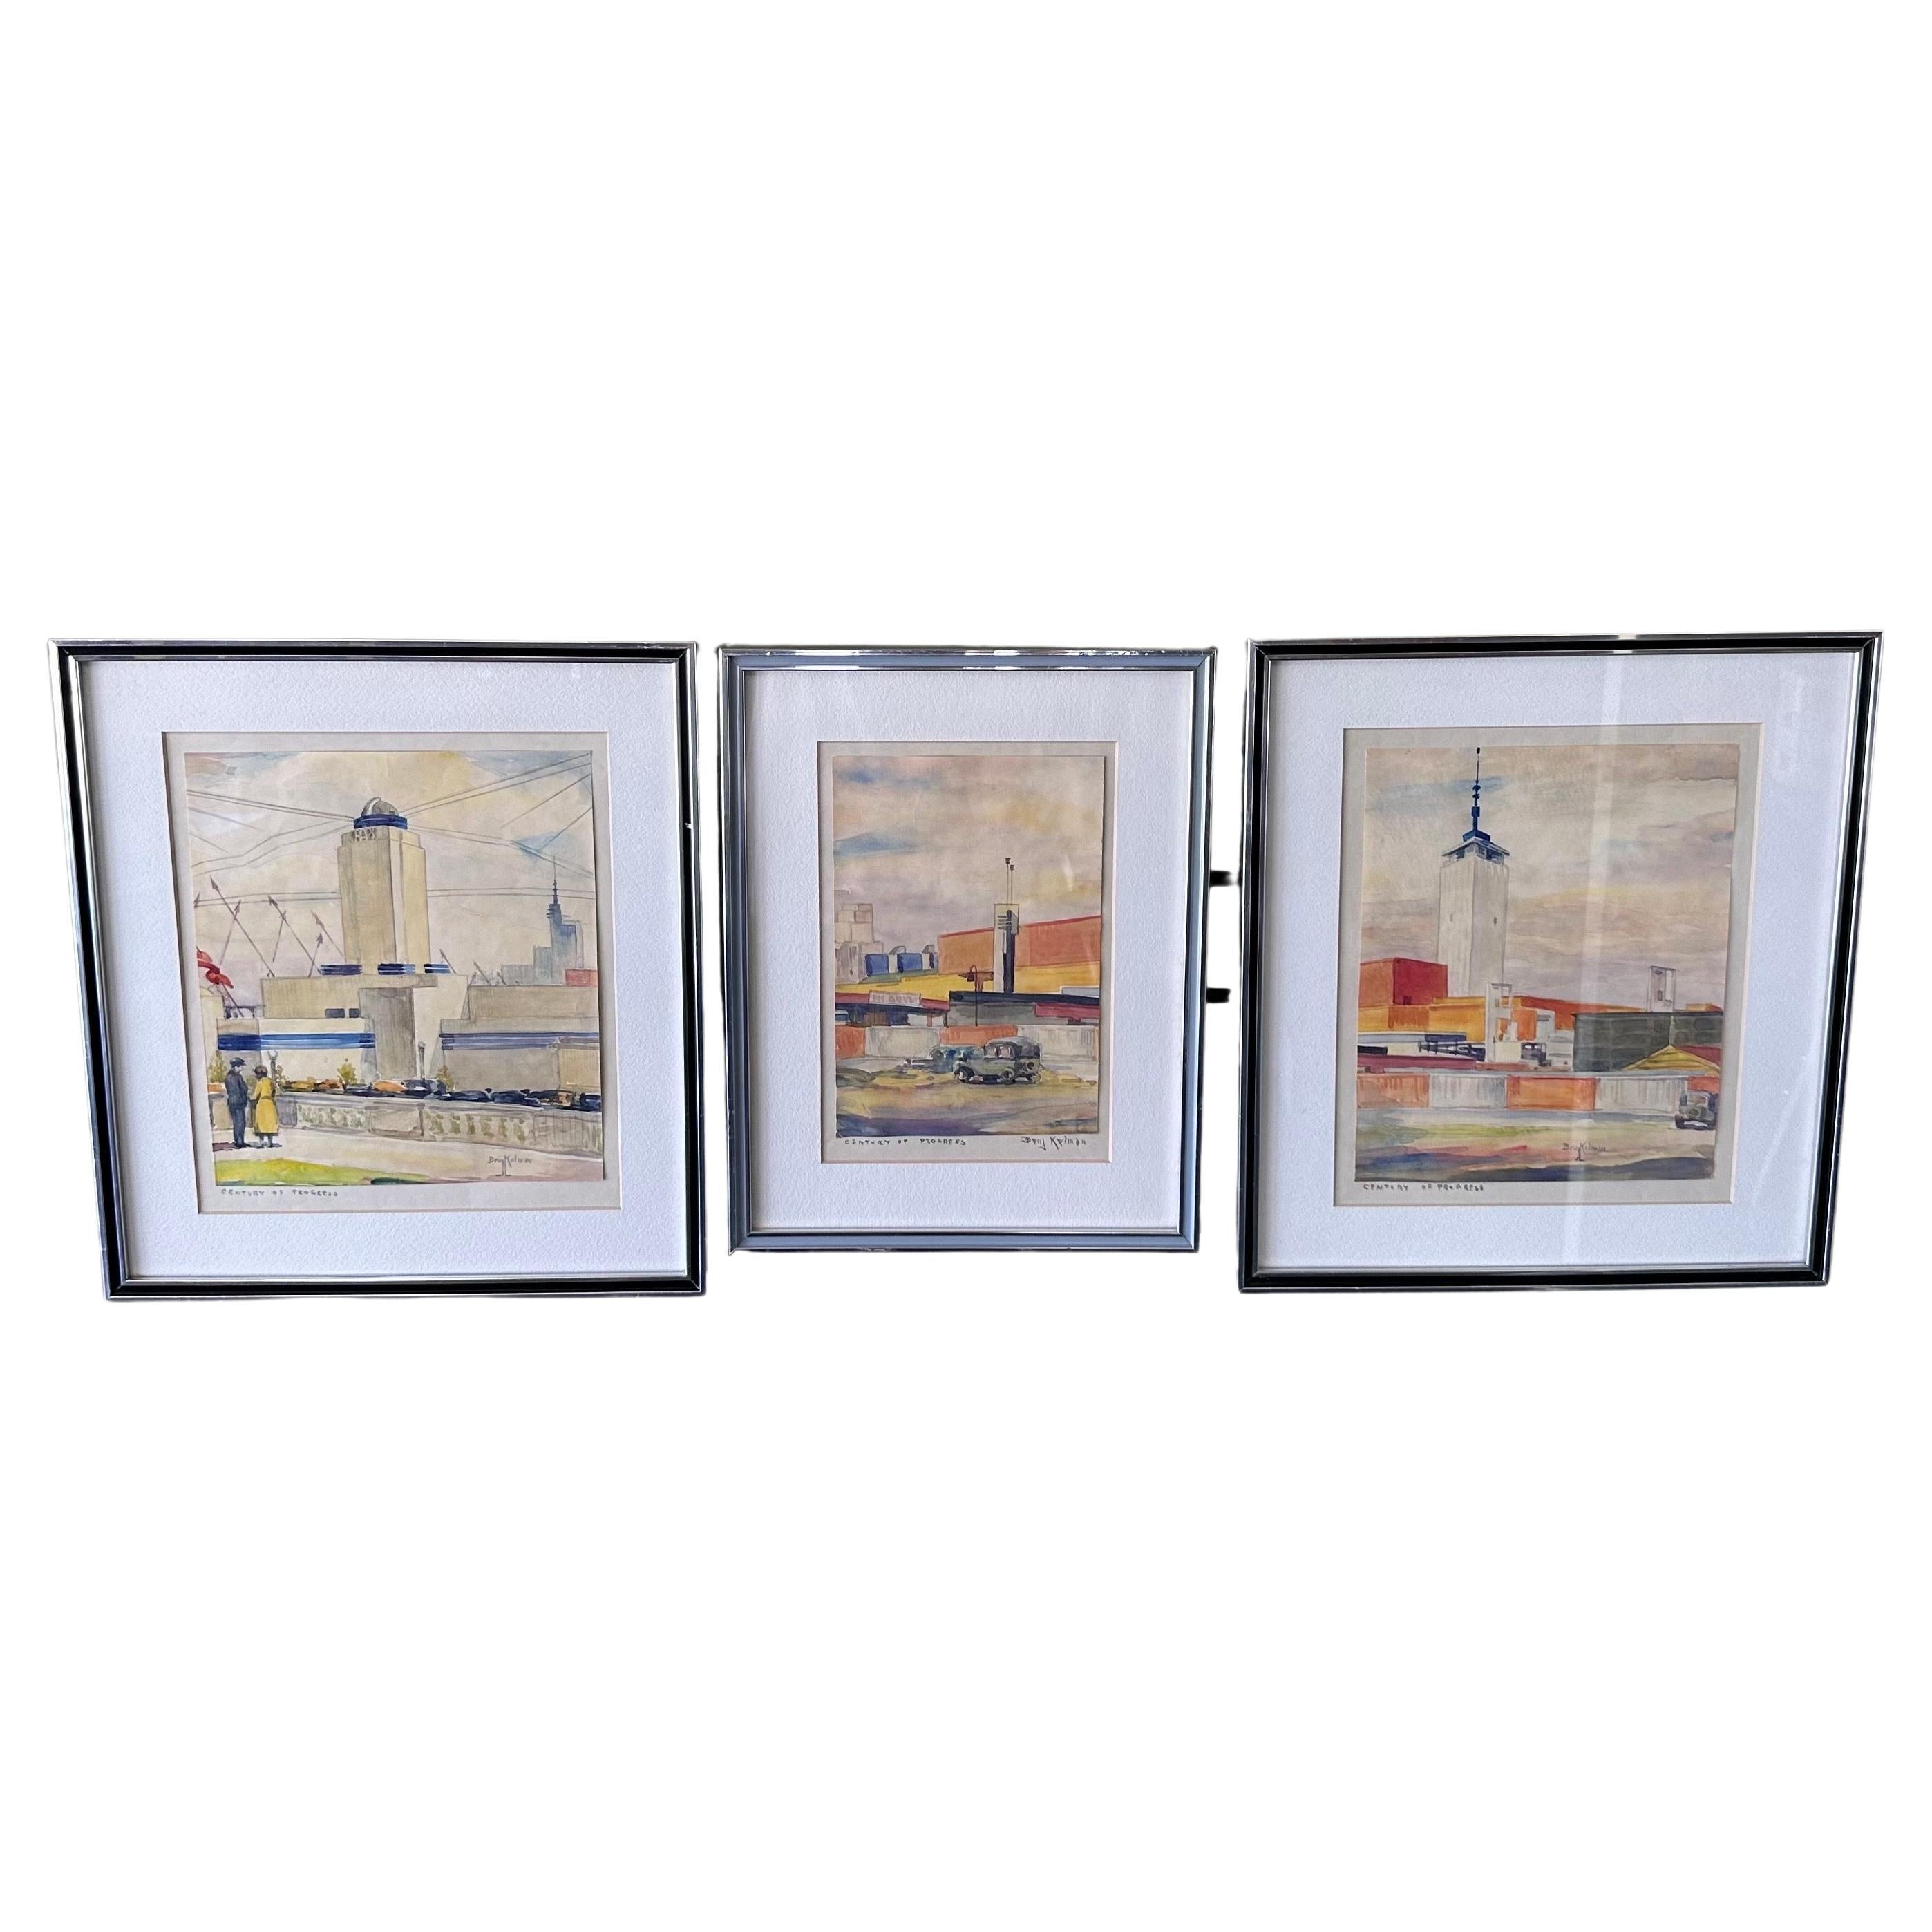 Three Original Watercolor Paintings "Century of Progress" by Benjamin Kelman For Sale